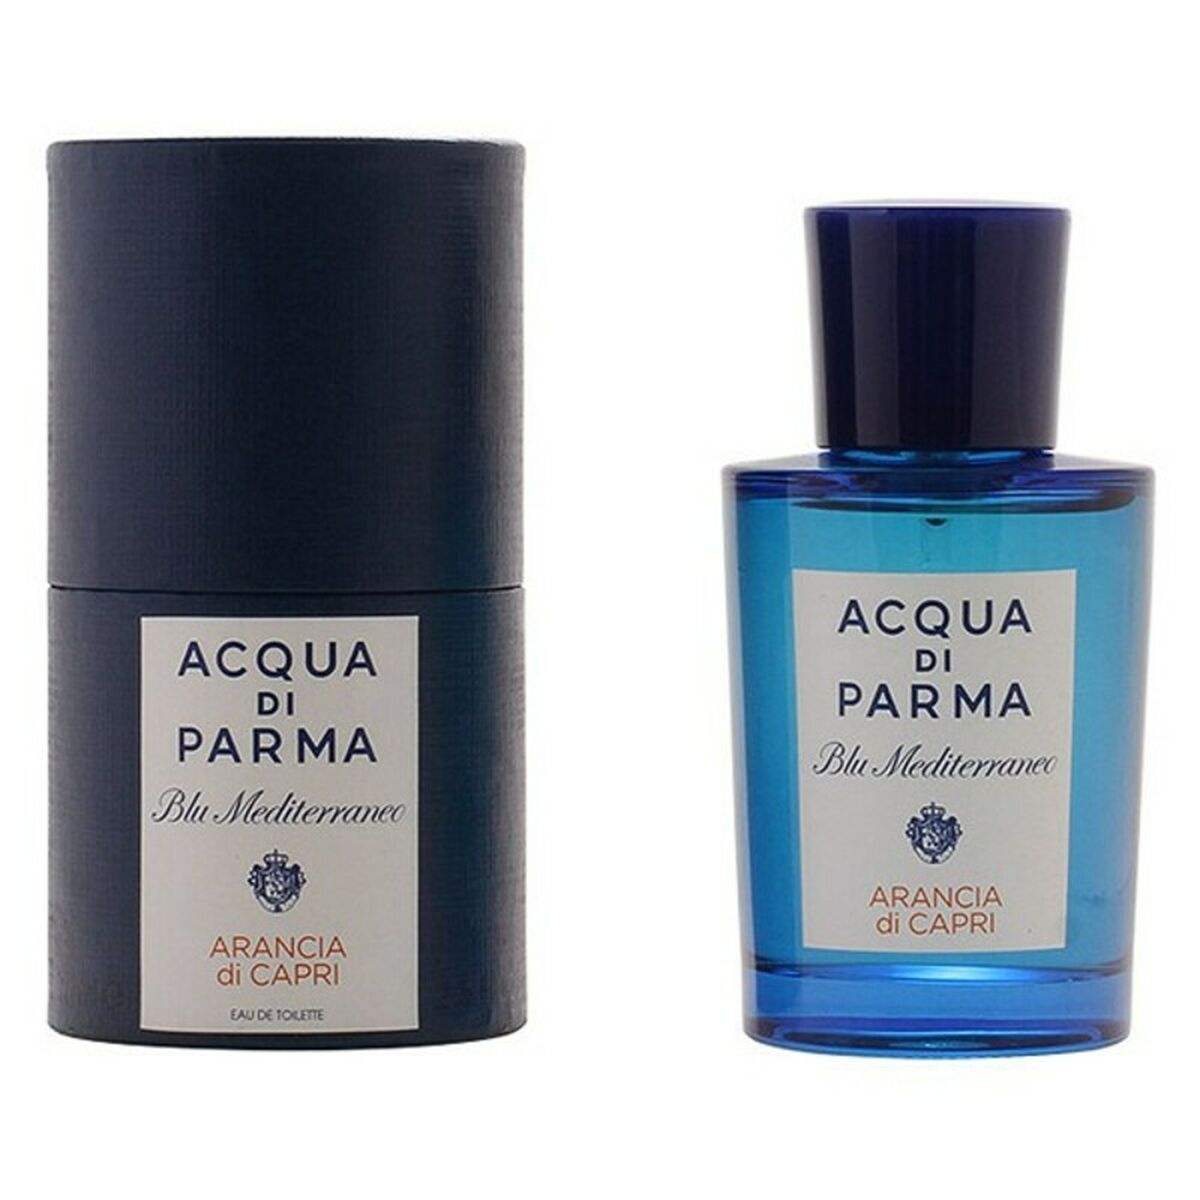 Parfum Homme Acqua Di Parma EDT Blu mediterraneo Arancia Di Capri 75 ml - Acqua Di Parma - Jardin D'Eyden - jardindeyden.fr